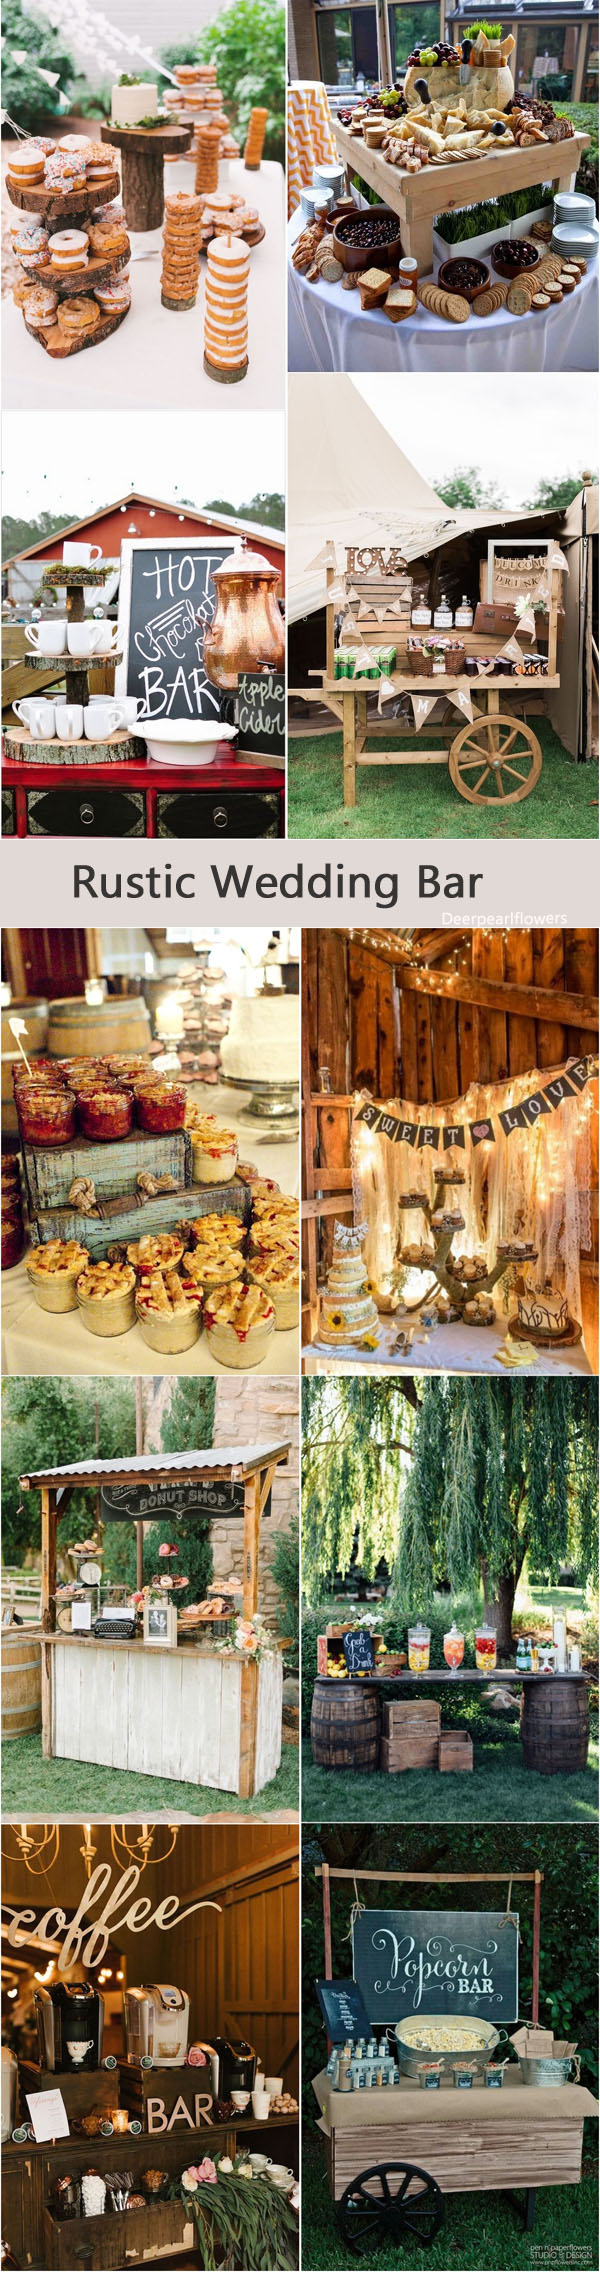 Rustic country wedding bar decor ideas